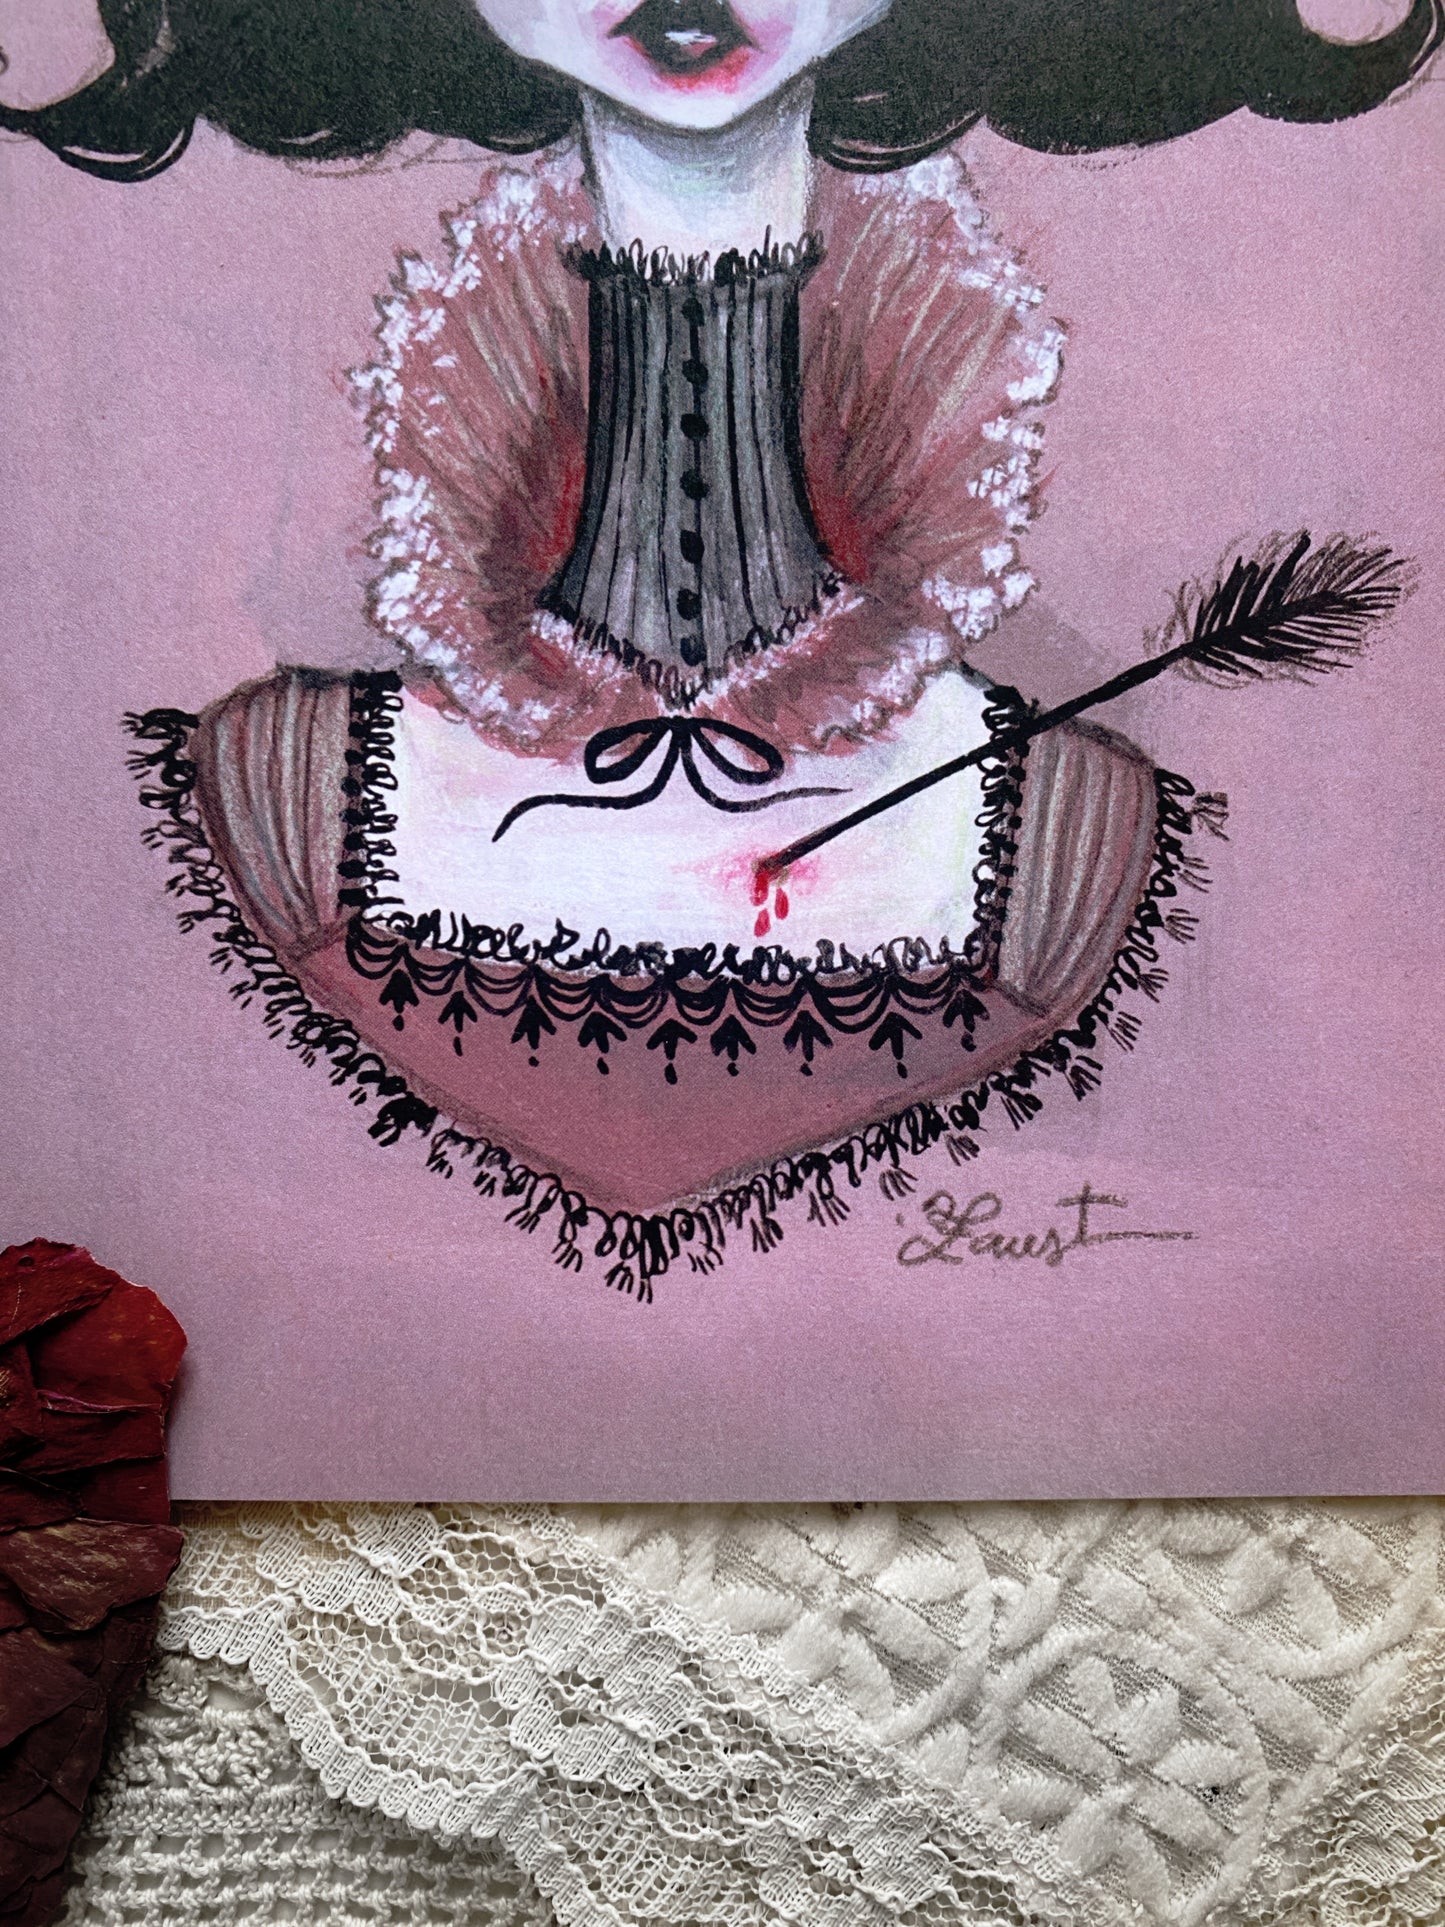 Cupid Countess - 8.5x11 Art Print